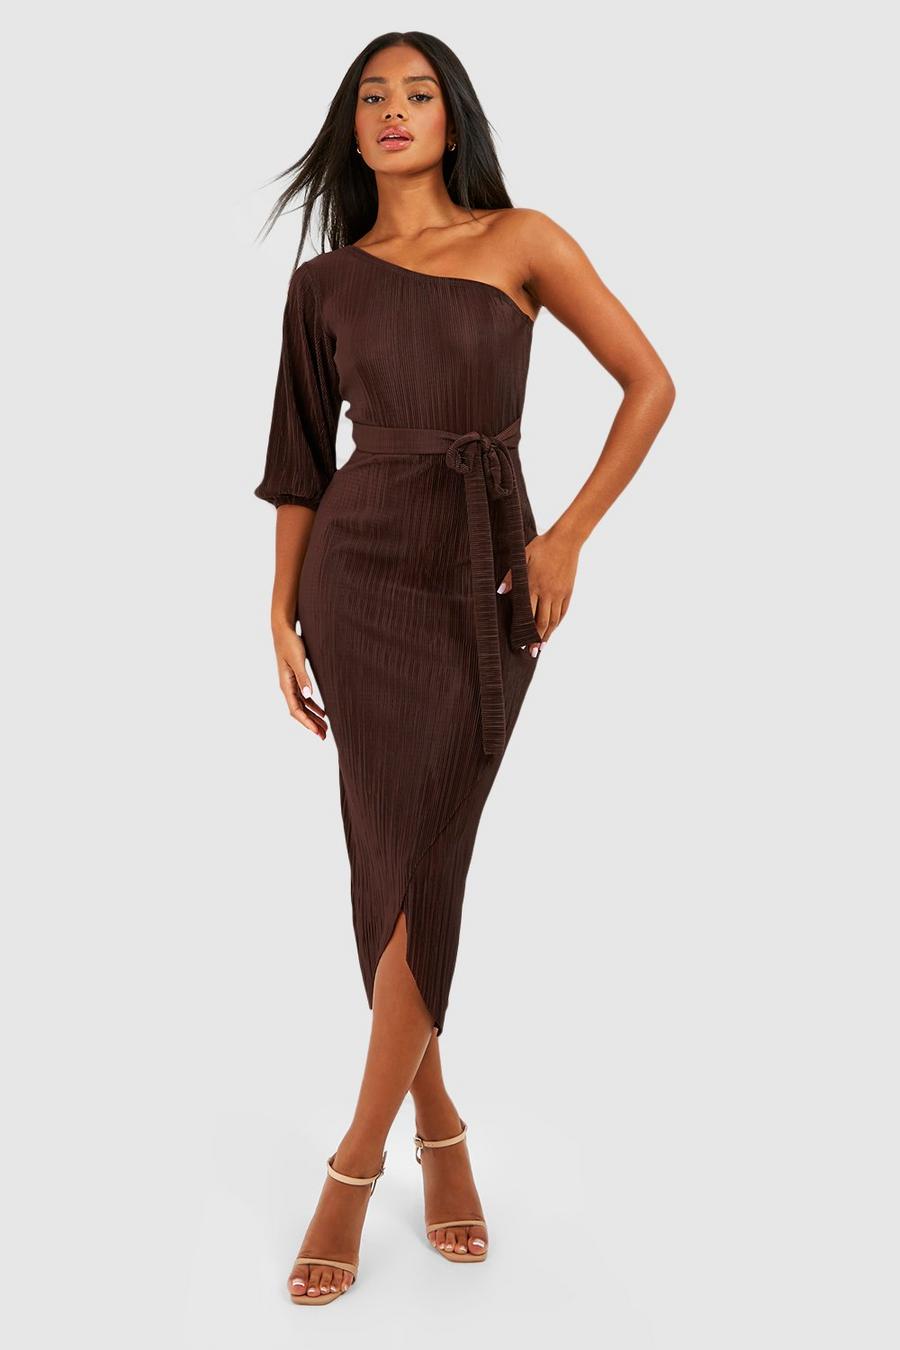 Chocolate brown One Shoulder Tie Waist Midiaxi Bodycon Dress